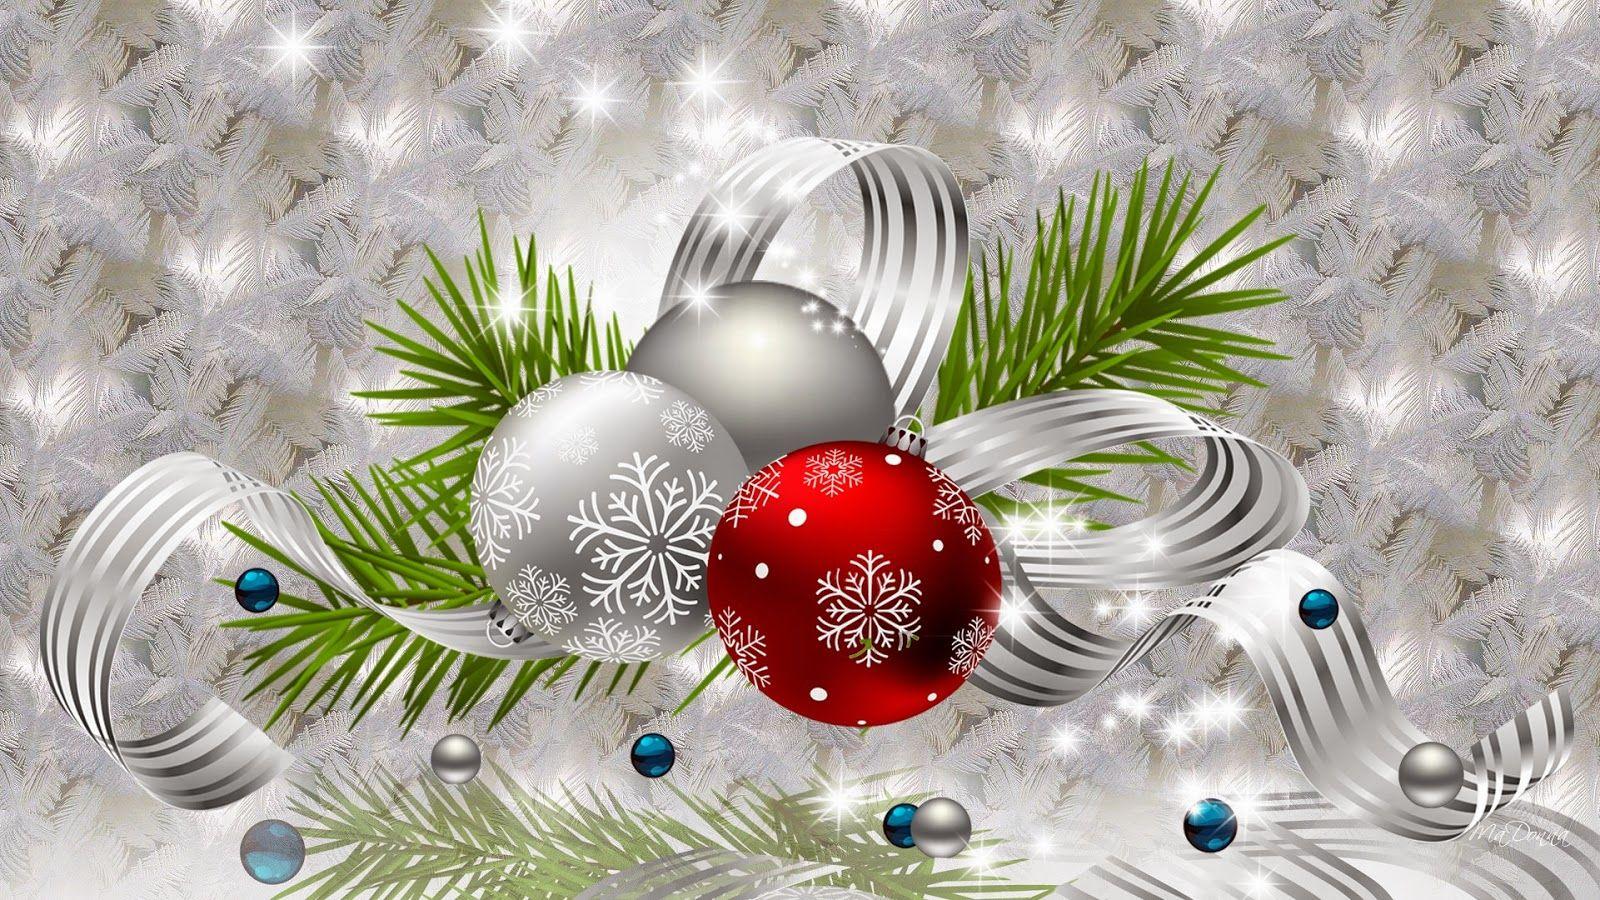 Christmas tree baubles decorations beautiful balls designs image. Christmas desktop wallpaper, Christmas wallpaper hd, Christmas desktop